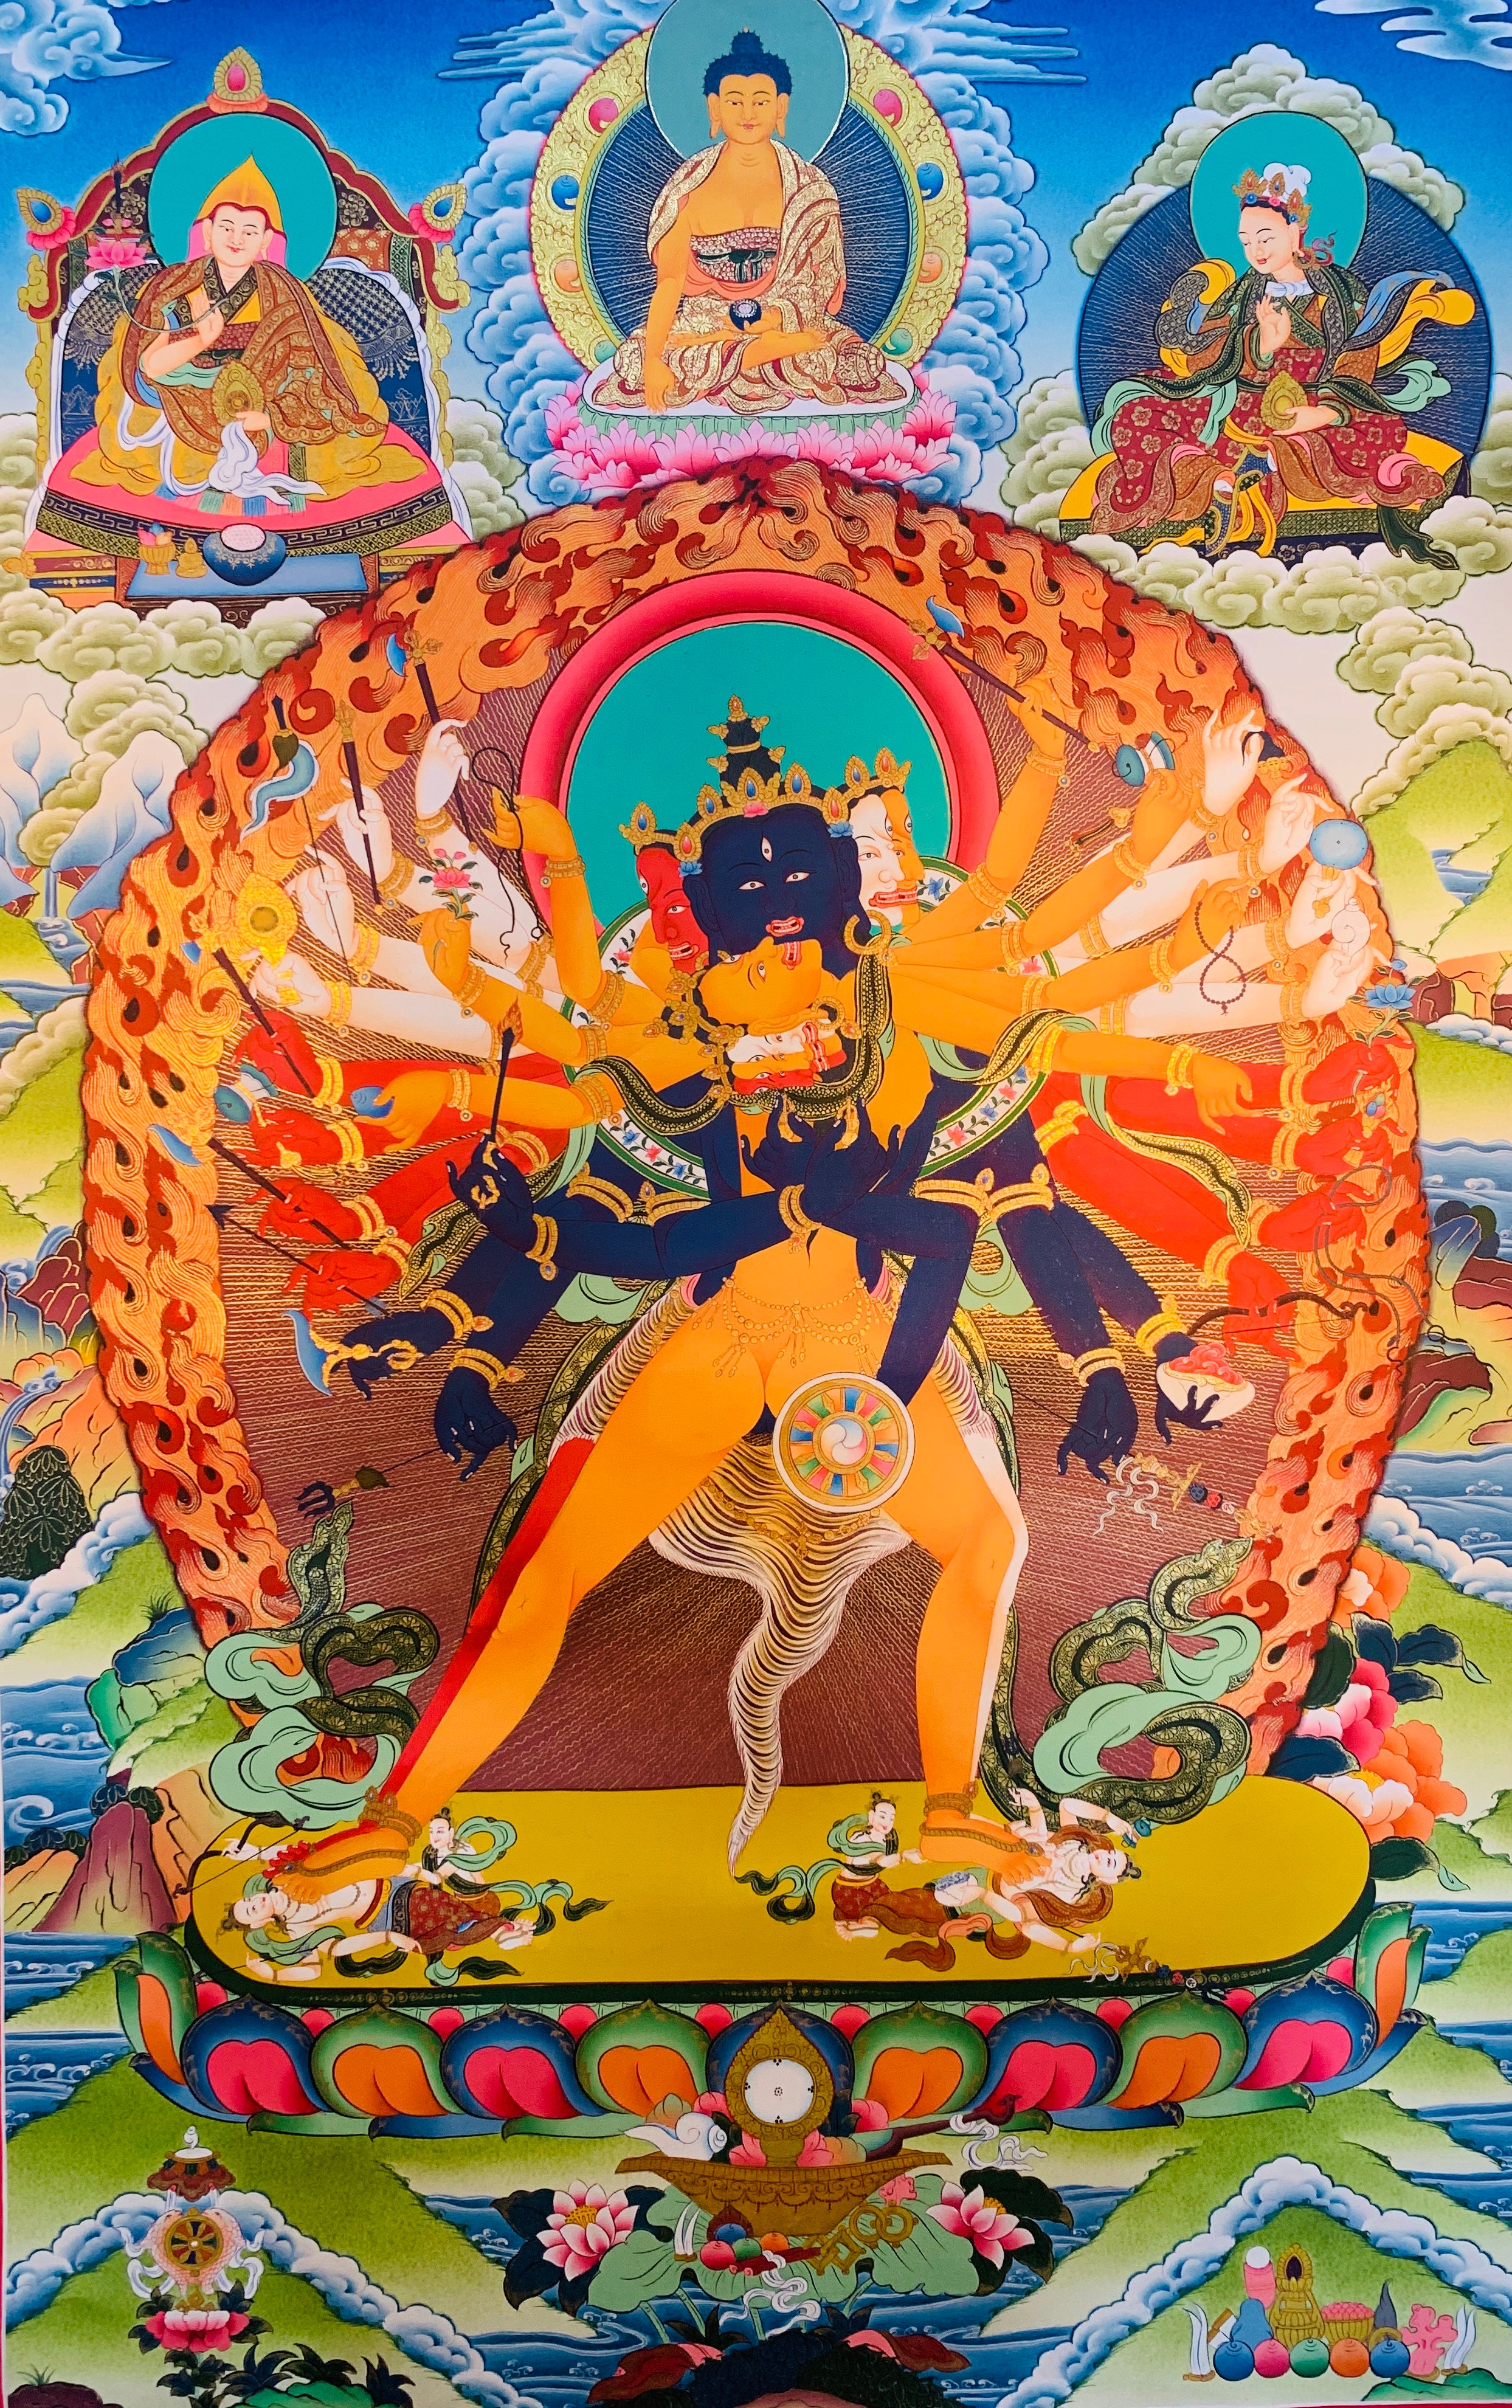 Wrathful Deity Kalachakra Thangka Painting 70*50 - The Thangka